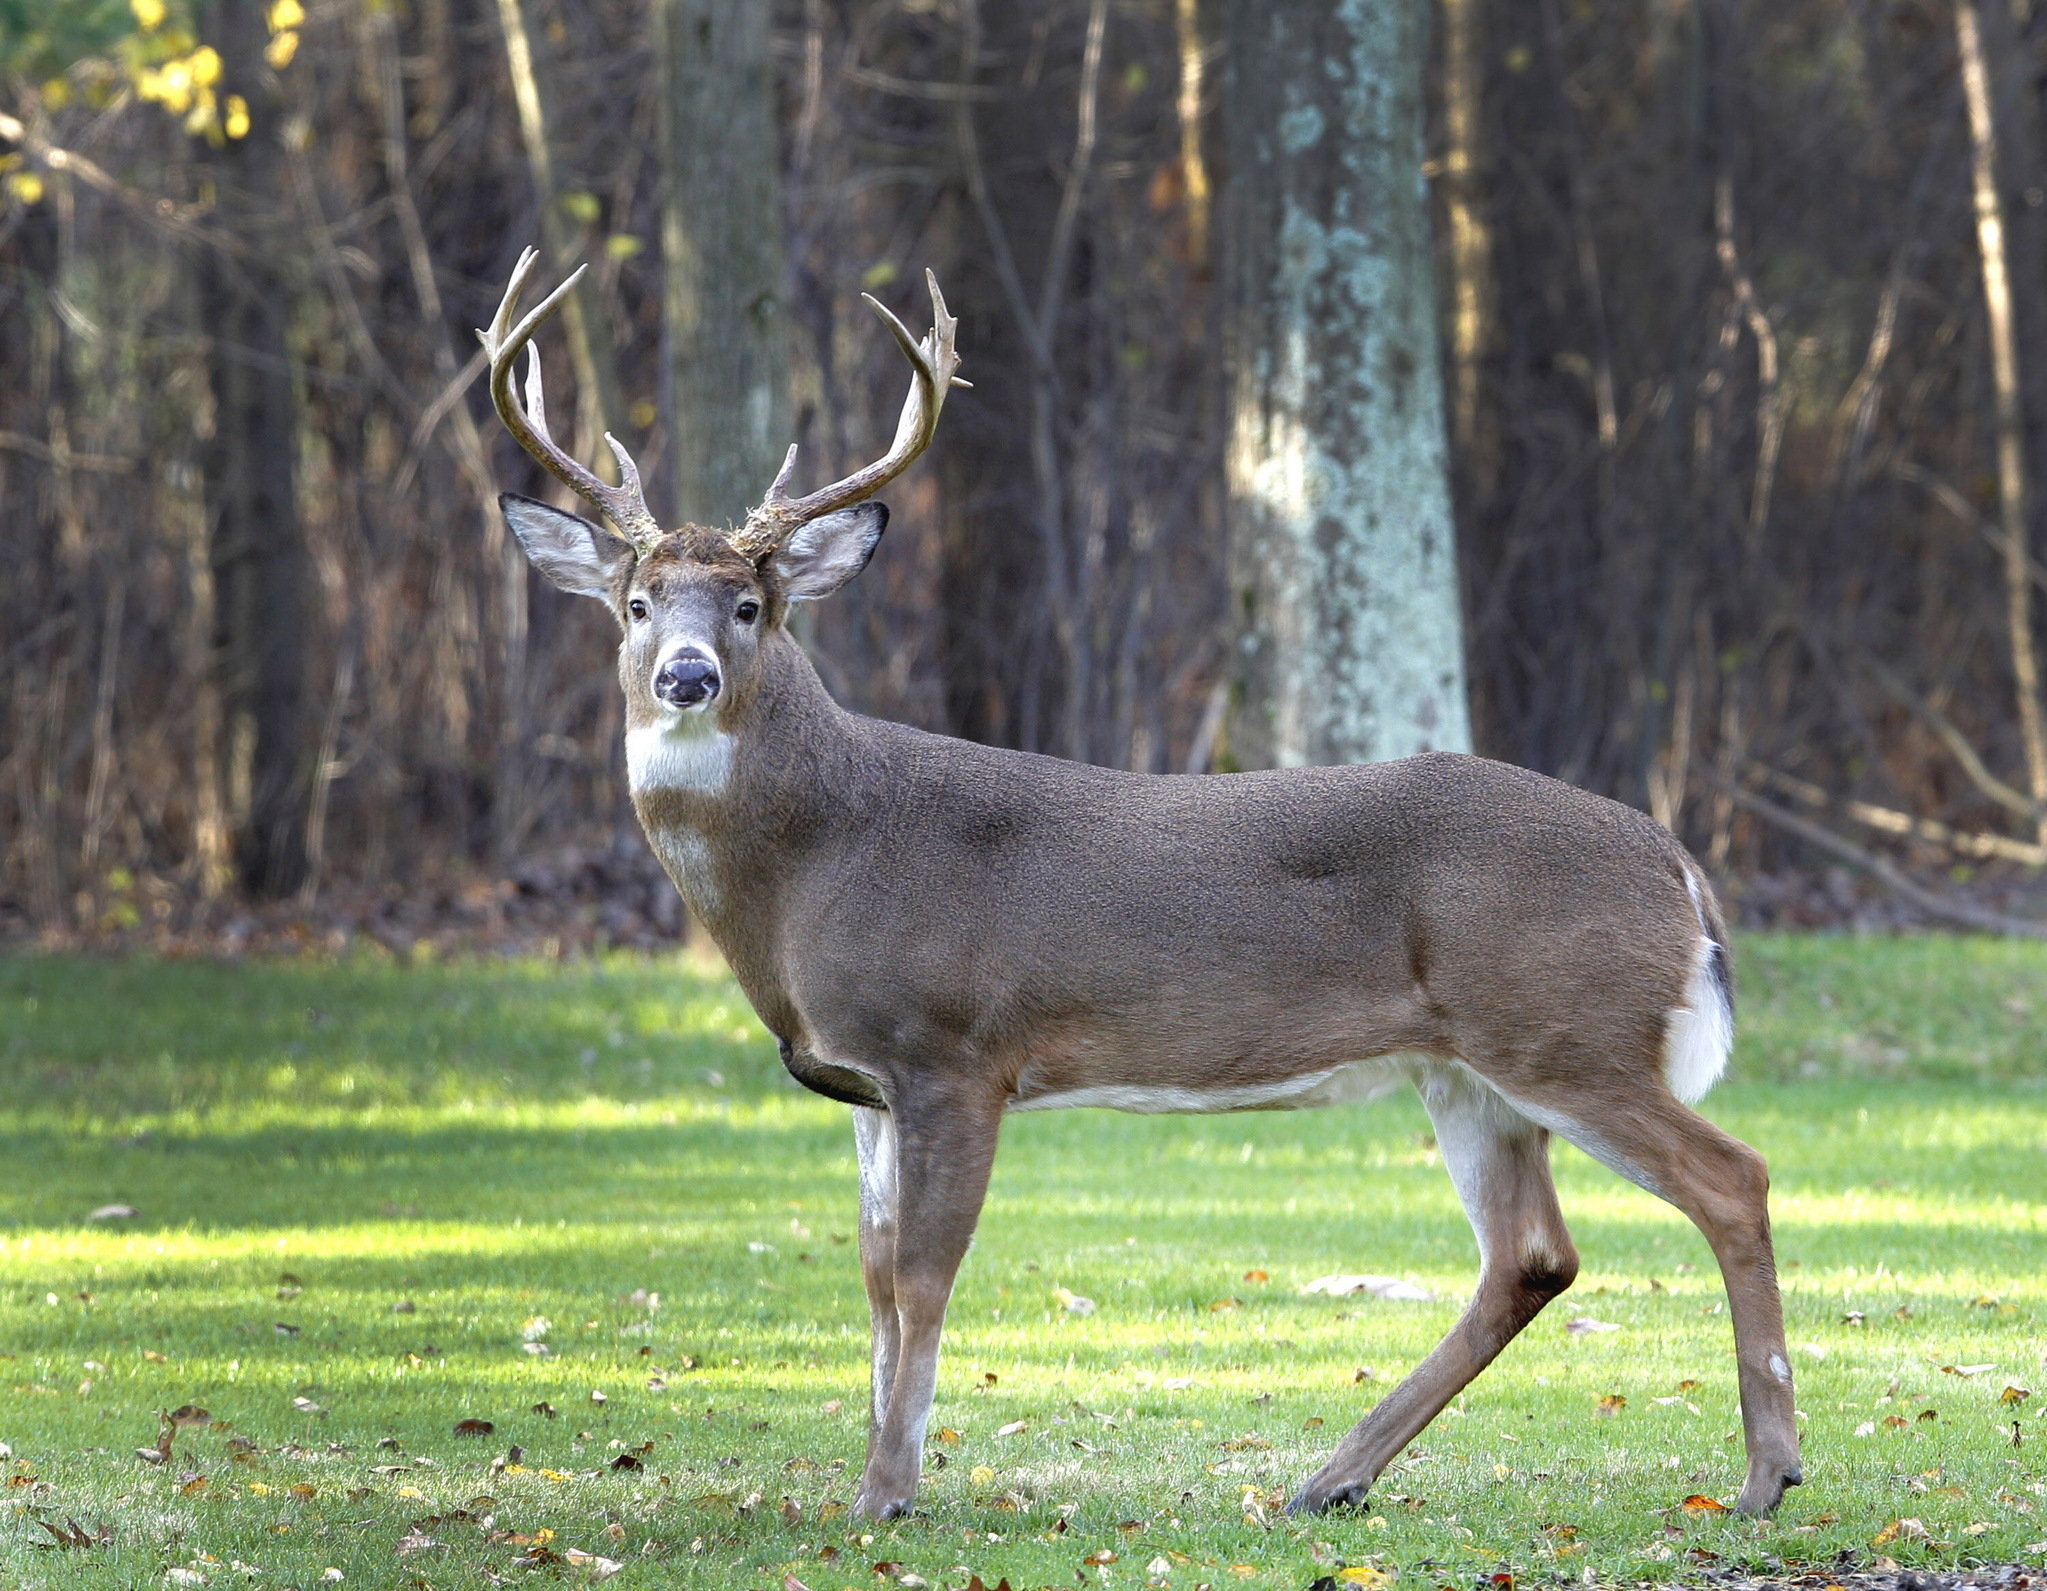 Outbreak of disease affecting Northeast Ohio deer herds | cleveland.com